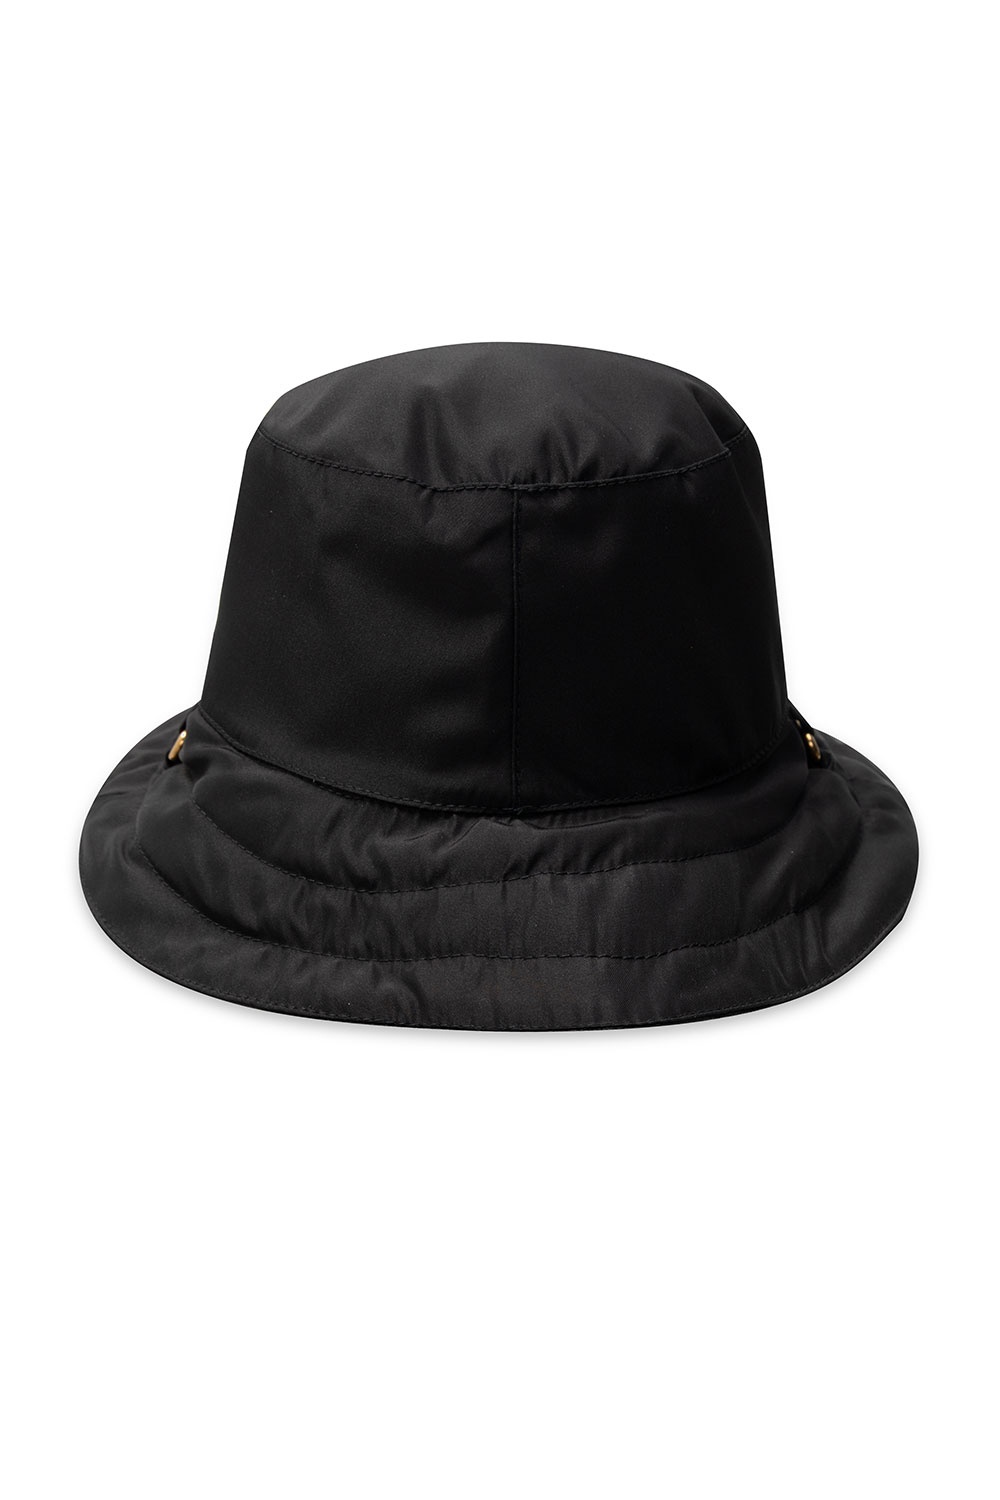 IetpShops twill Bucket - flexfit hat cotton dad cap with logo classic Gucci Nicaragua low profile Black -